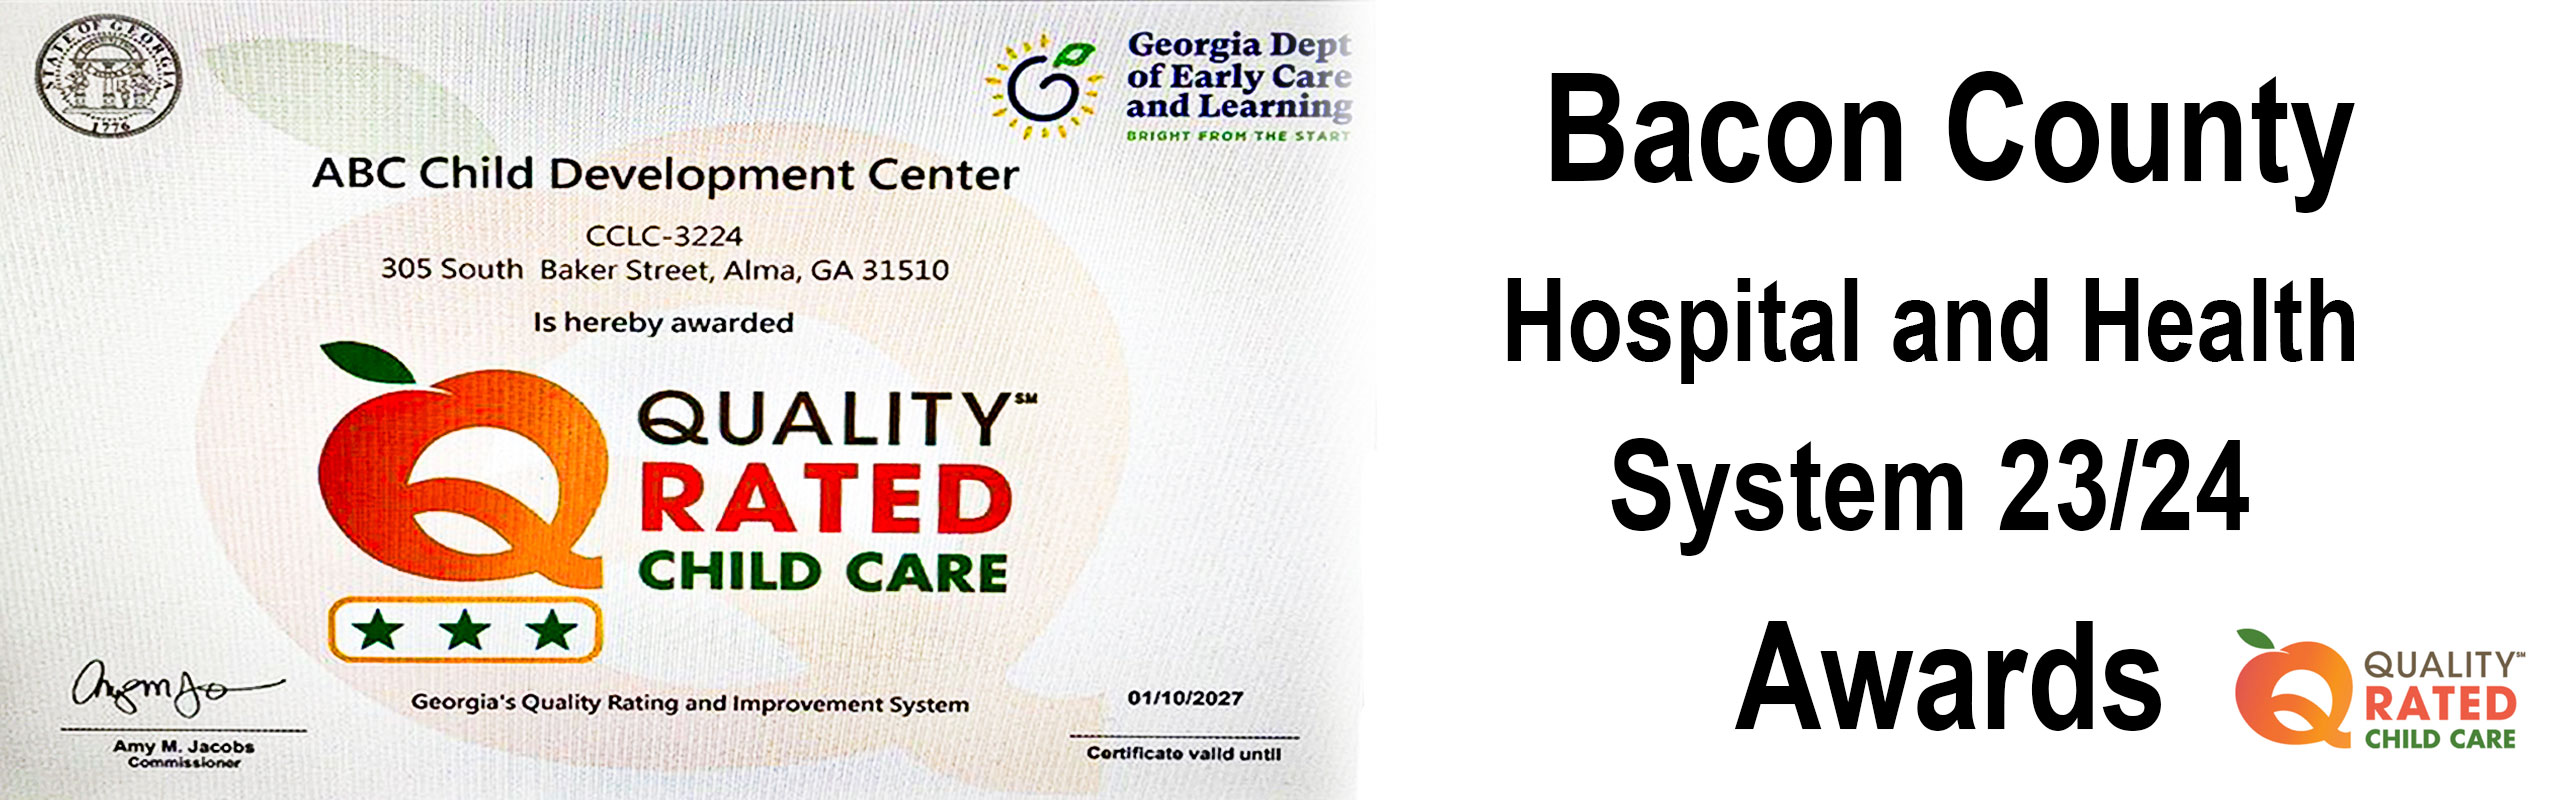 Bacon County Hospital and Health System 23/24 Awards